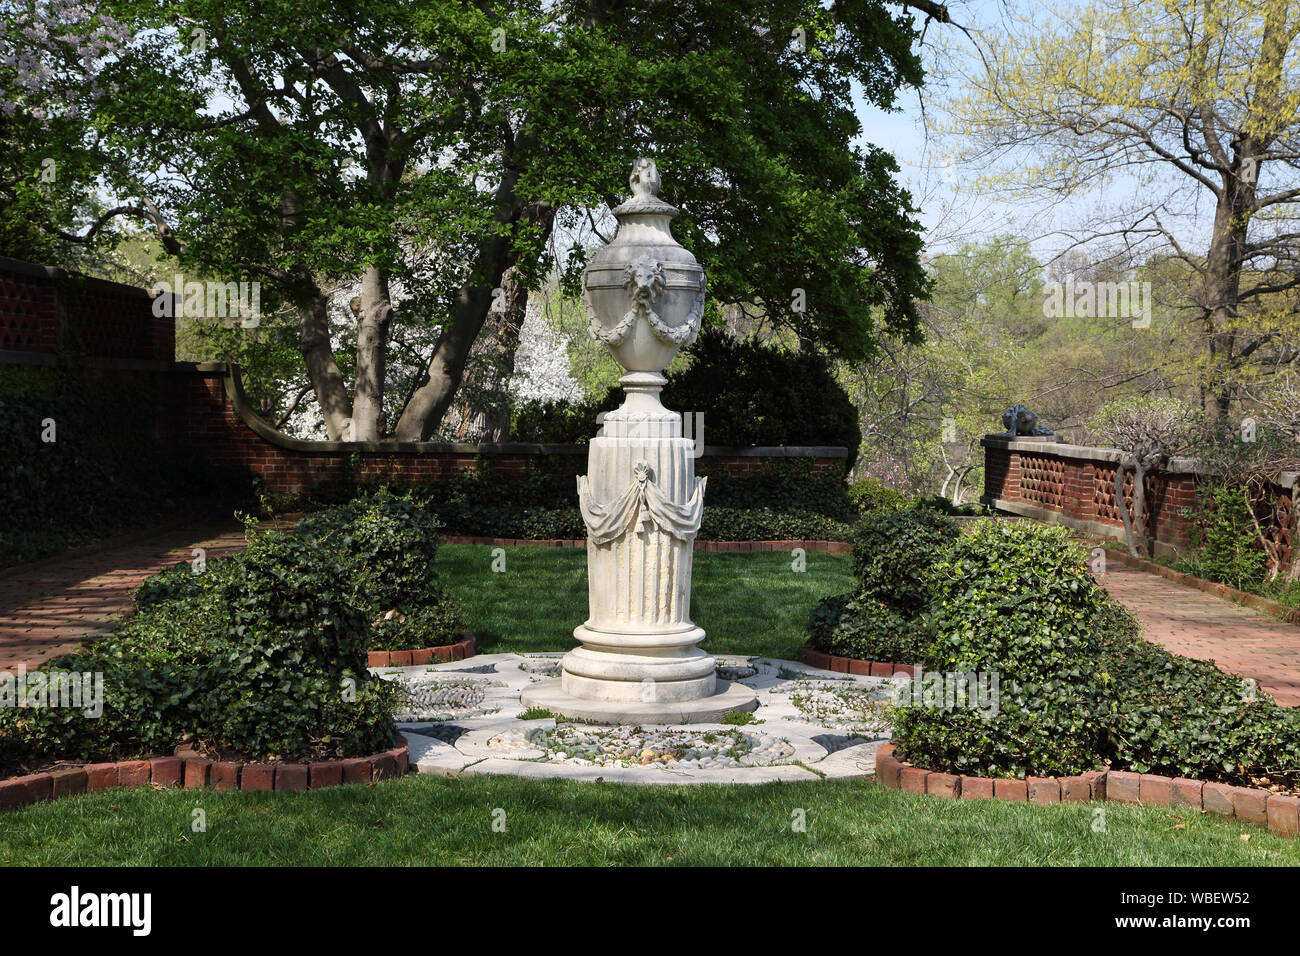 Garden Views At Dumbarton Oaks In The Georgetown Neighborhood Of